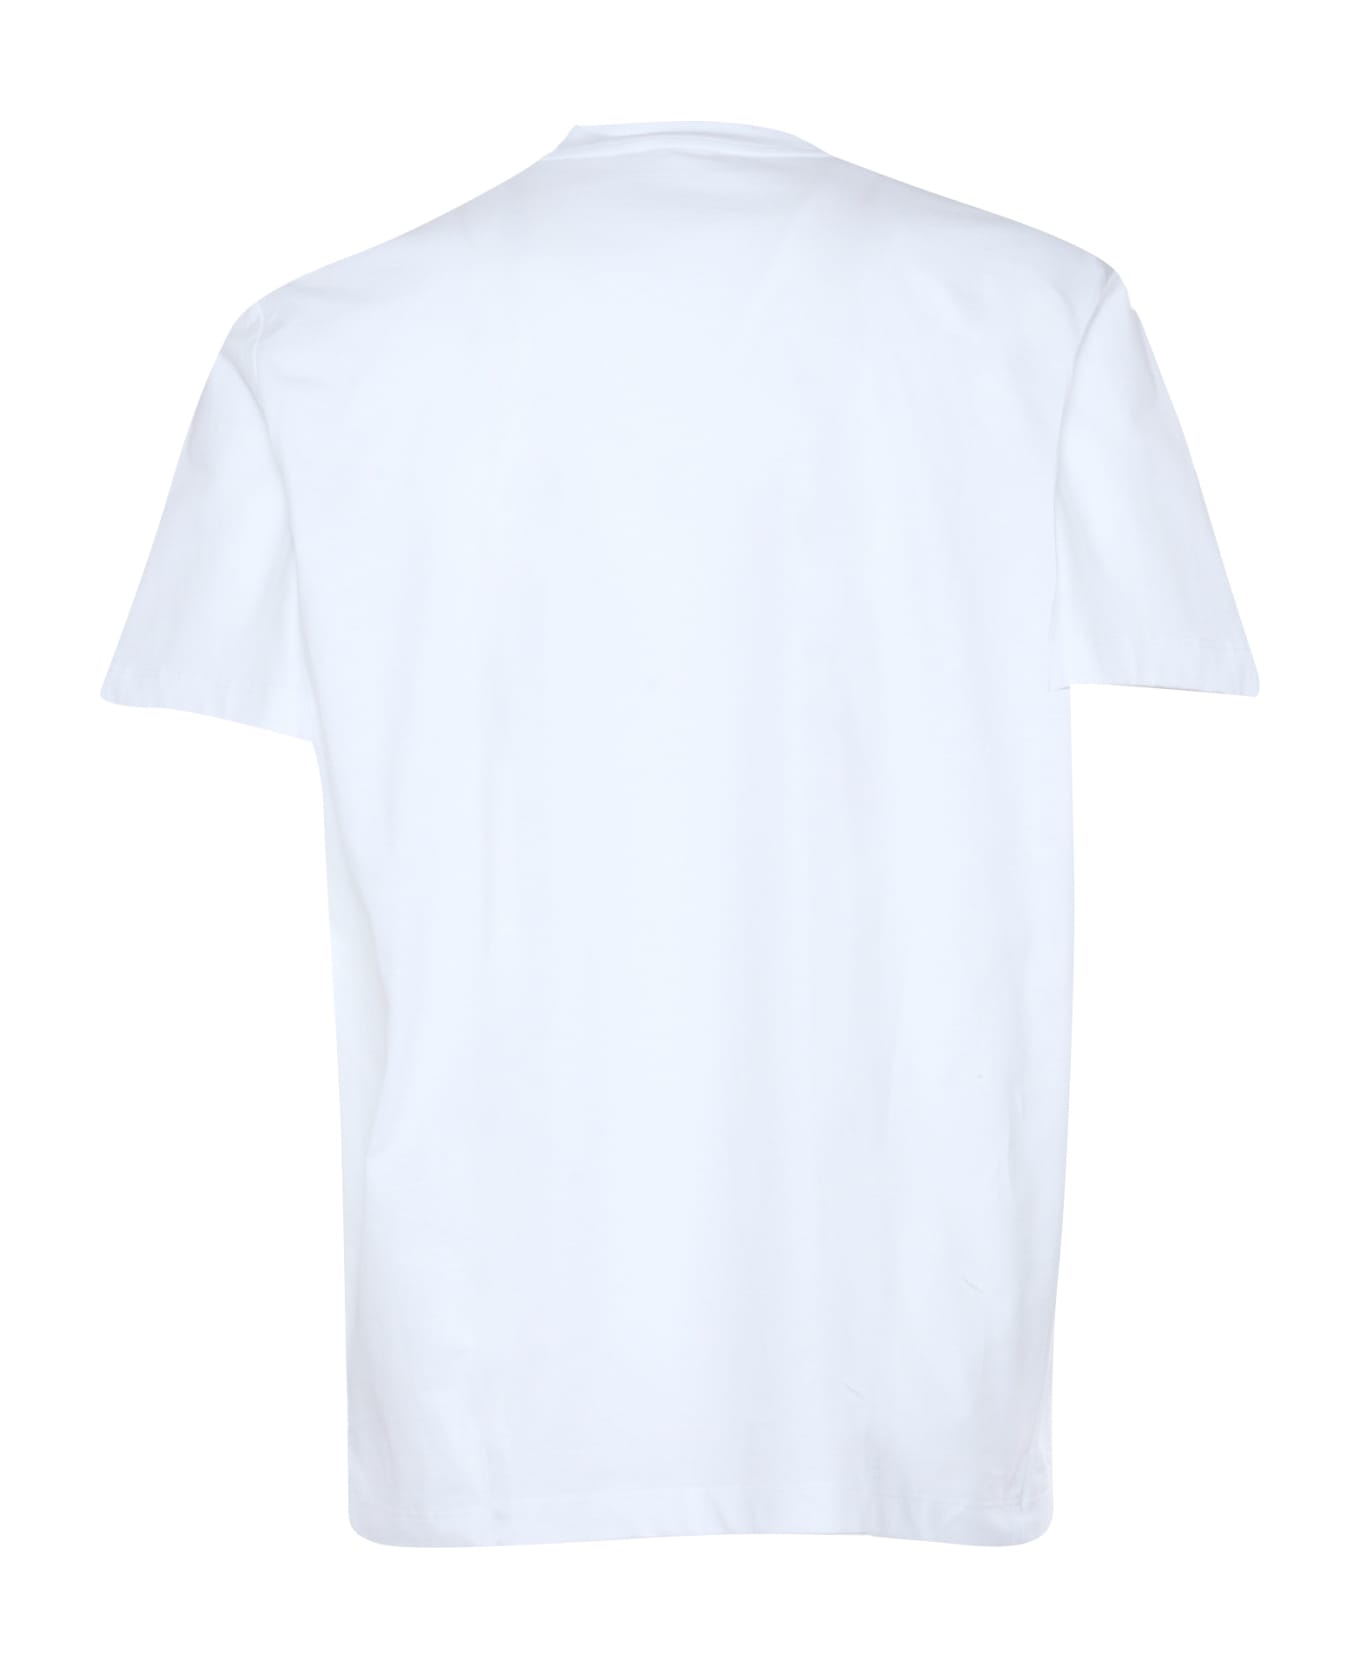 Peserico White T-shirt With Pocket - WHITE